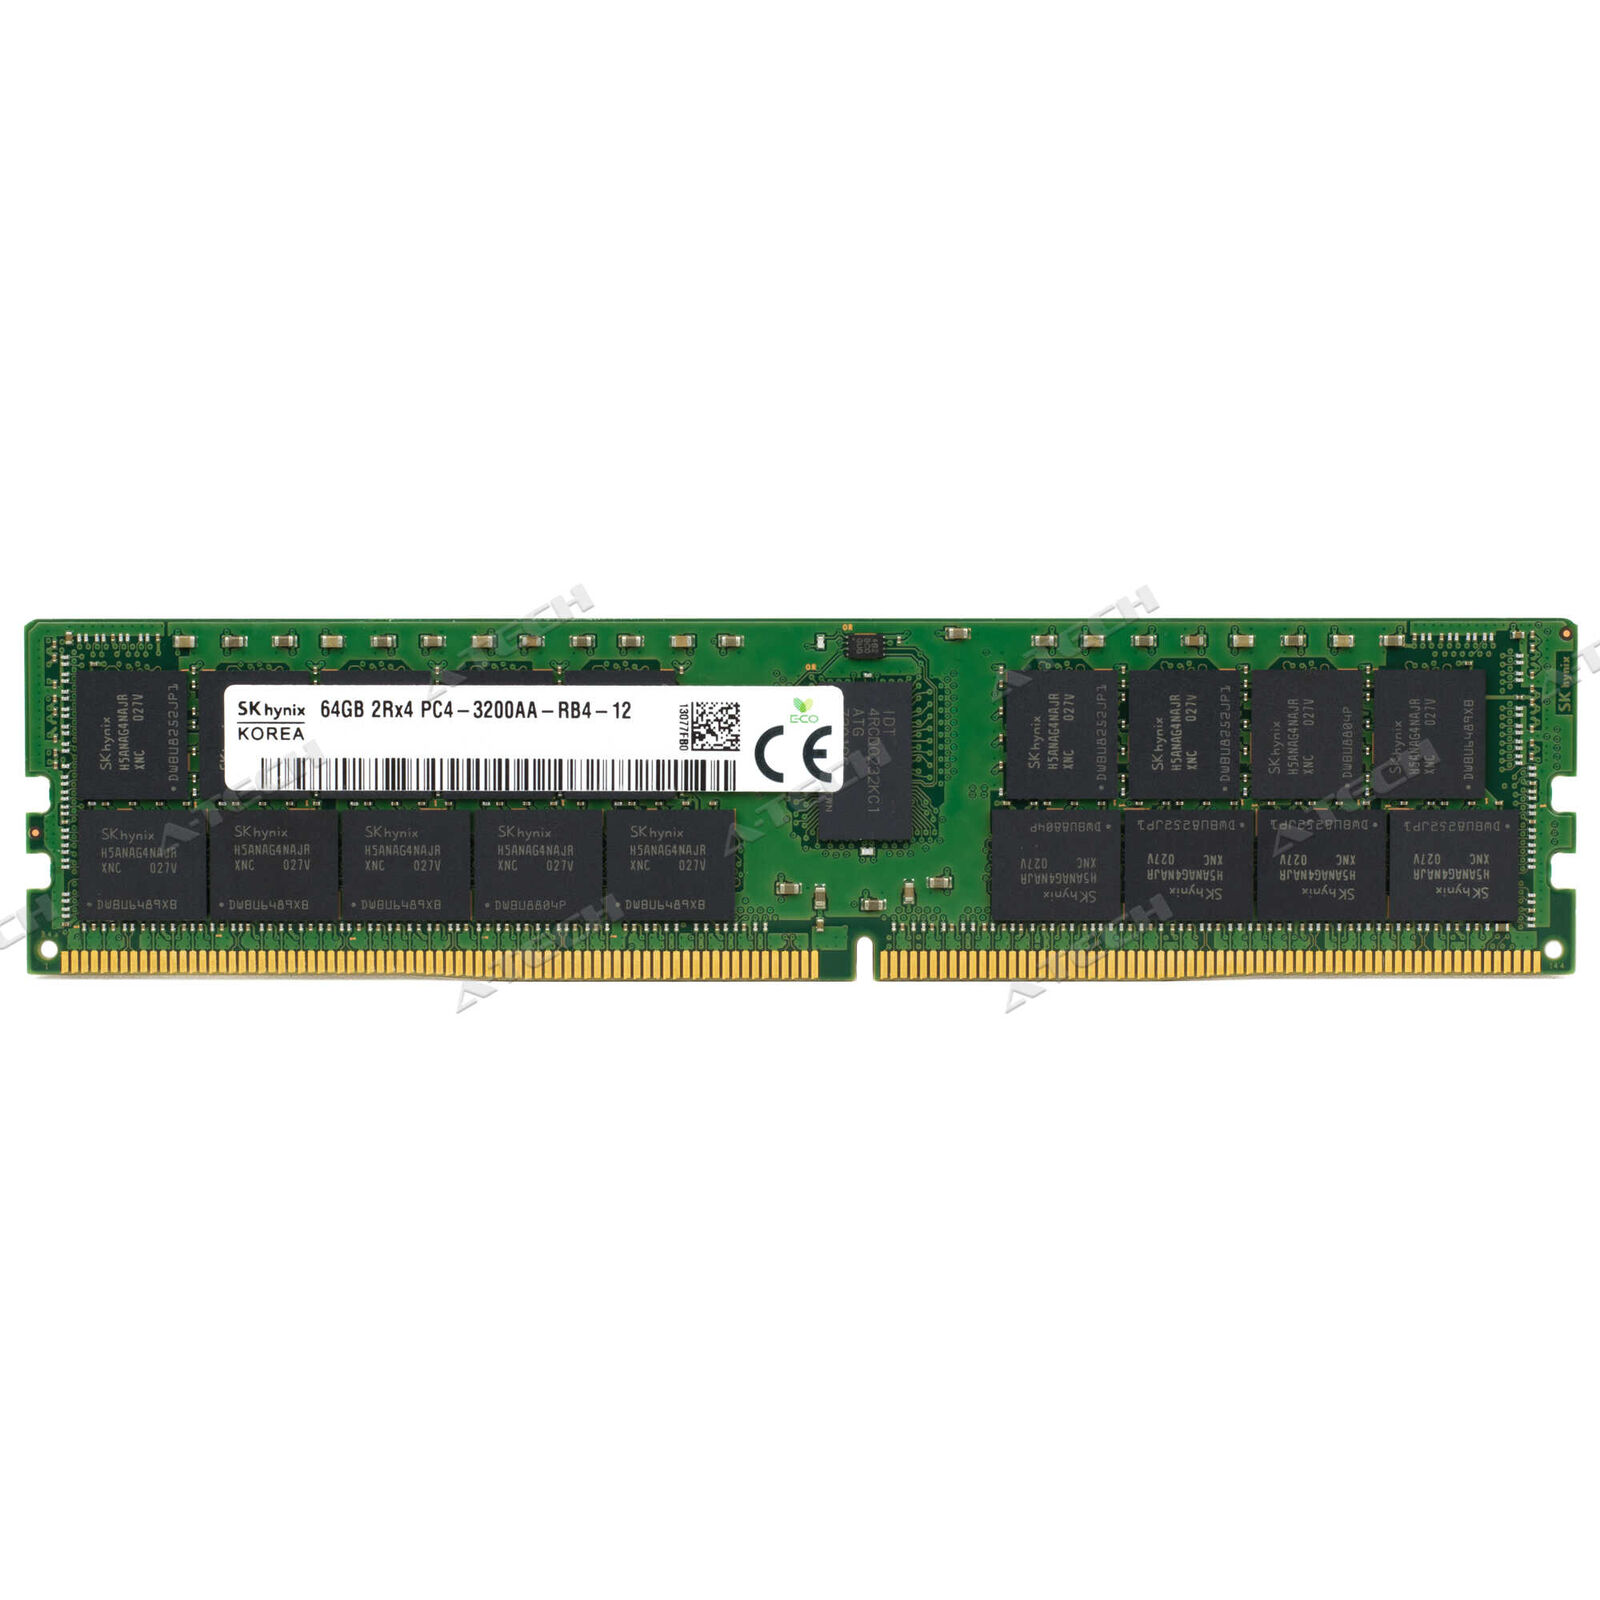 Hynix 64GB 2Rx4 PC4-3200 RDIMM DDR4-25600 ECC REG Registered Server Memory RAM